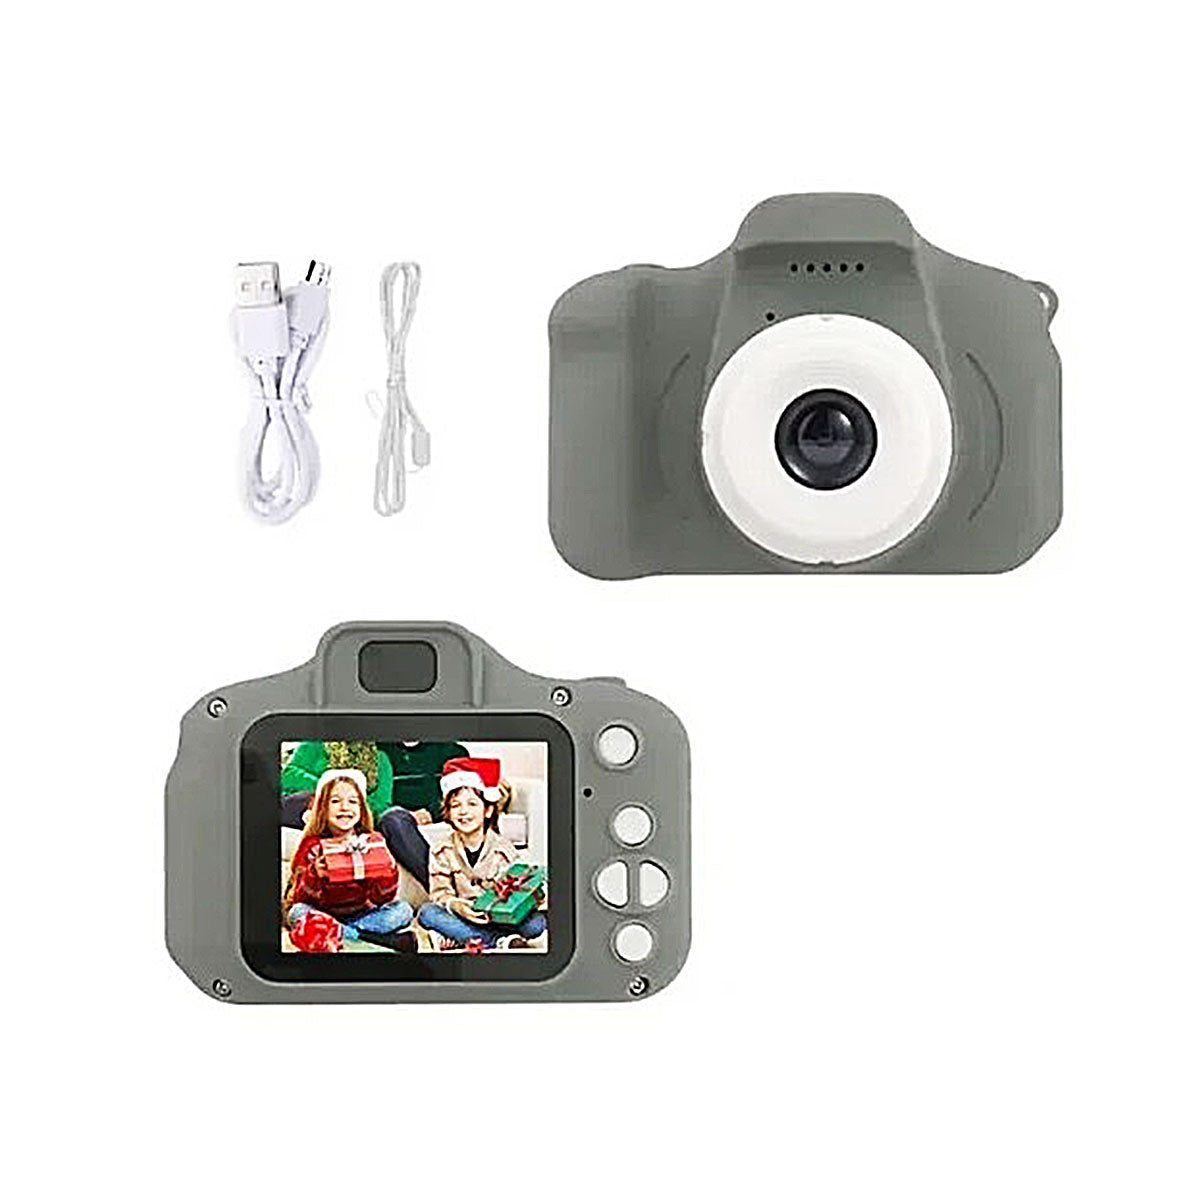 Children's Mini Waterproof HD Camera Toy 2 inch Screen